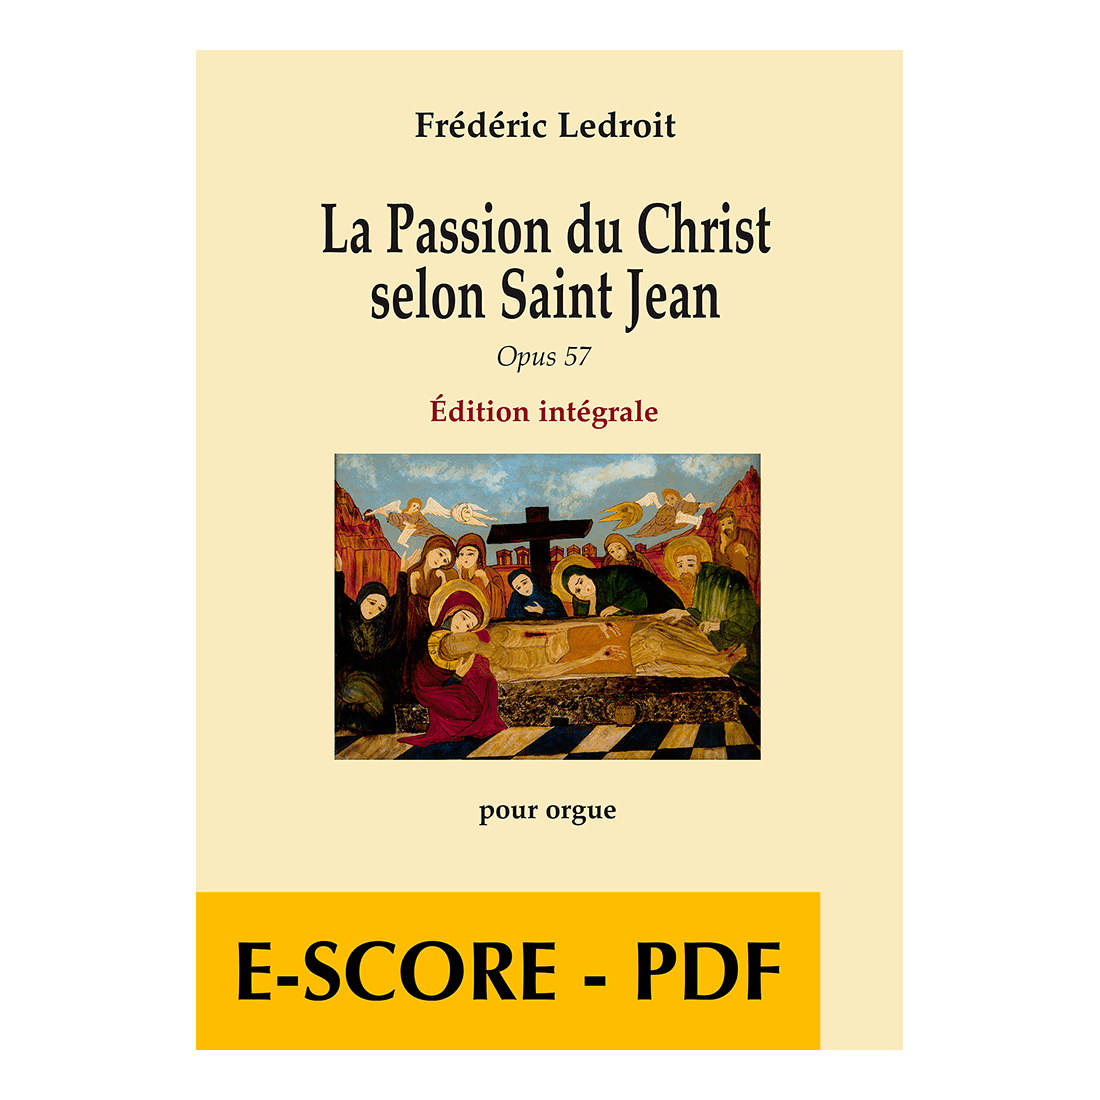 La Passion du Christ selon Saint Jean für Orgel opus 57- Vollständige Ausgabe - E-score PDF